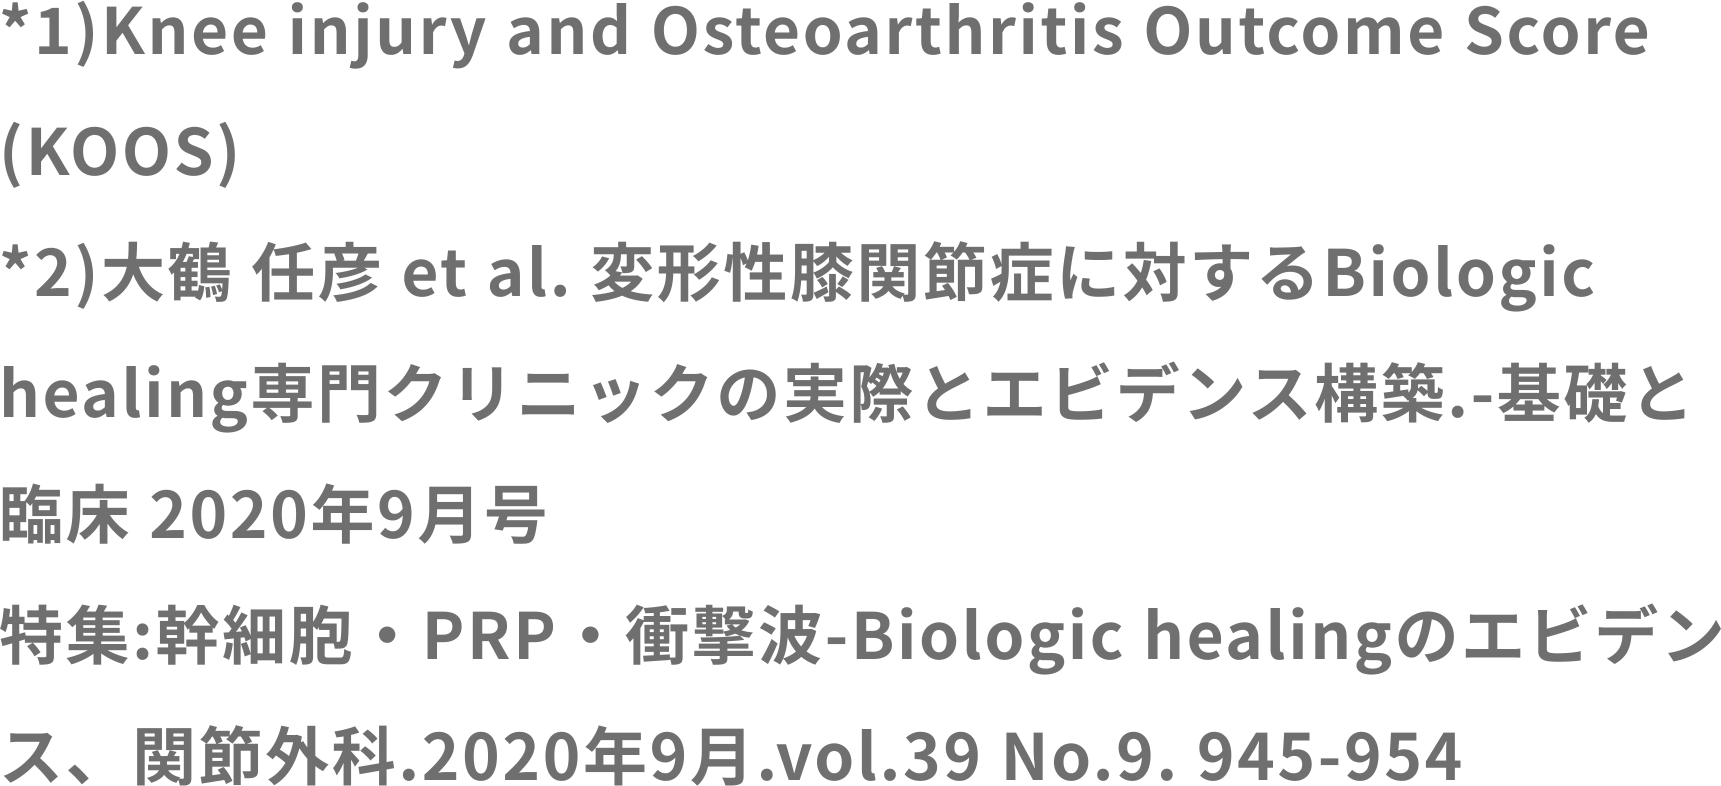 *1　Knee injury and Osteoarthritis Outcome Score
(KOOS)
*2　大鶴 任彦 et al. 変形性膝関節症に対するBiologic
healing専門クリニックの実際とエビデンス構築.-基礎と
臨床 2020年9月号
特集:幹細胞・PRP・衝撃波-Biologic healingのエビデン
ス、関節外科.2020年9月.vol.39 No.9. 945-954